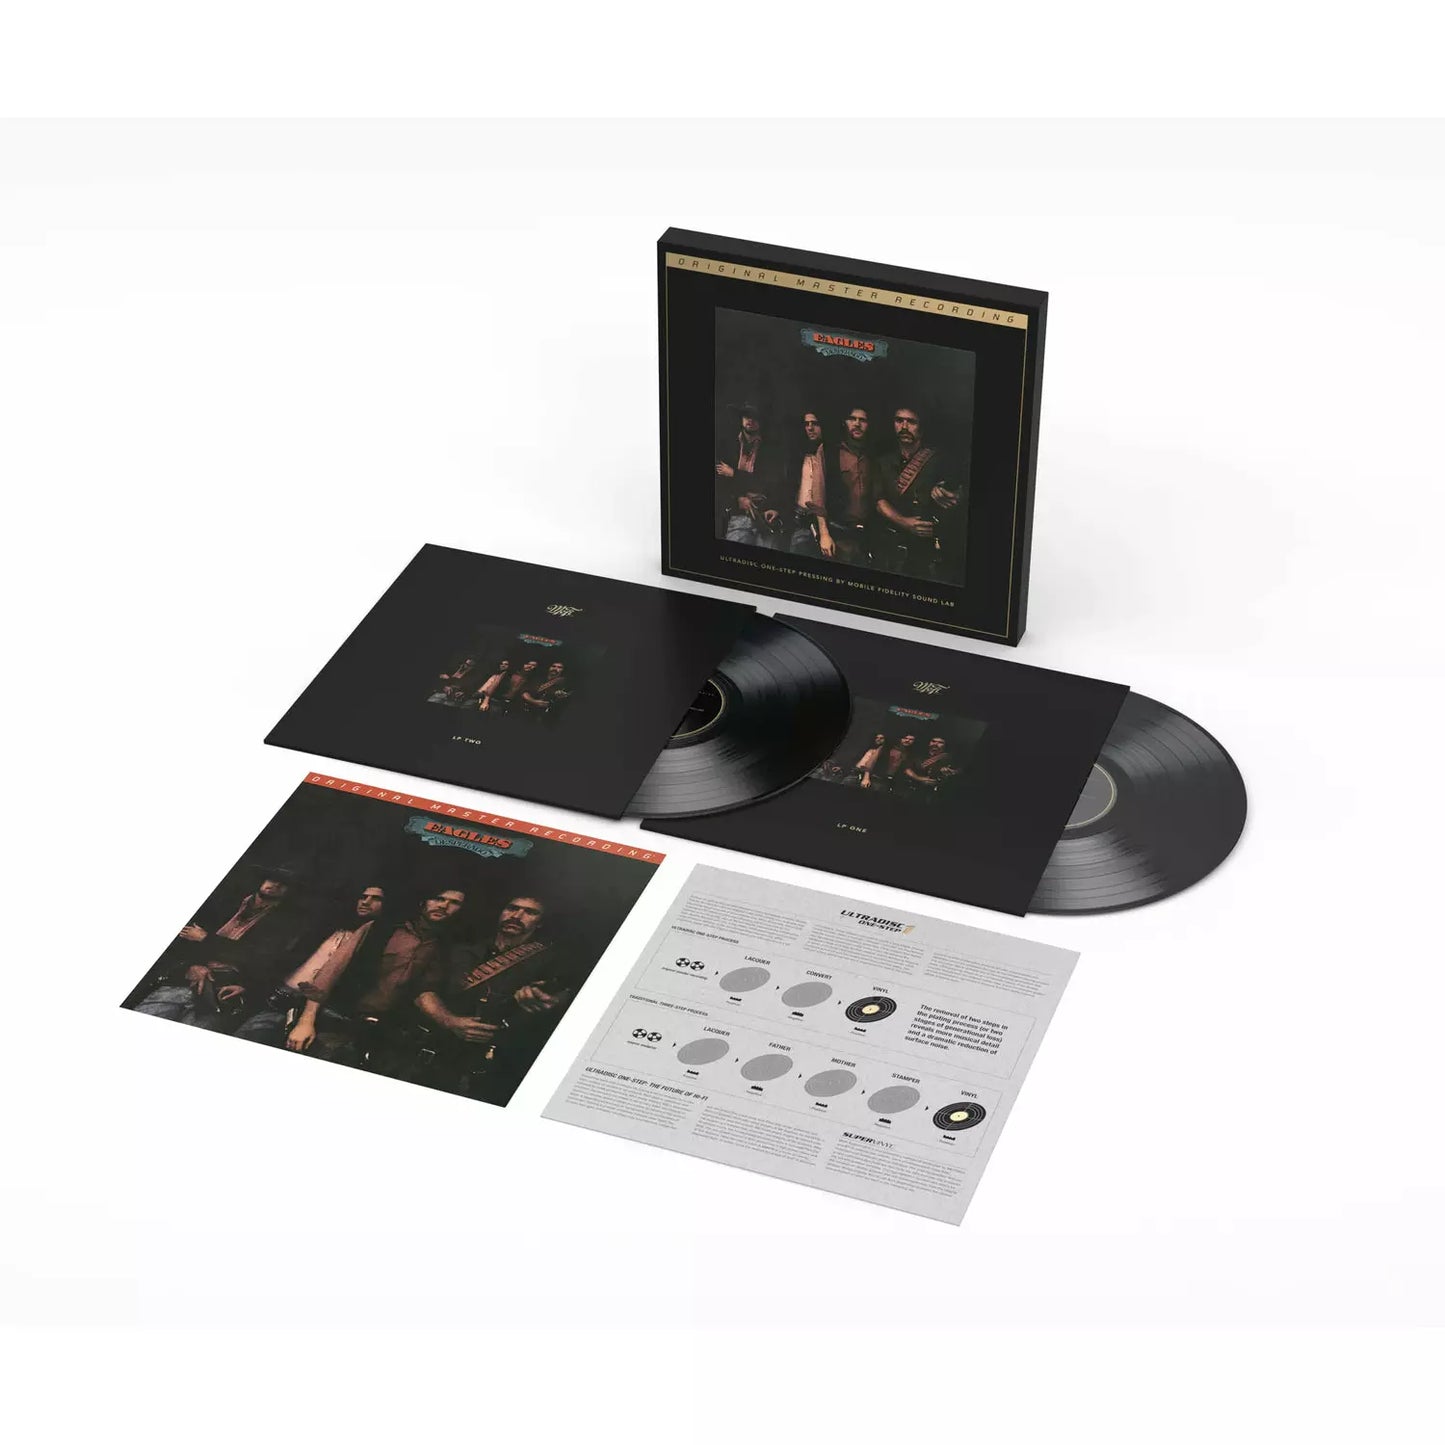 Eagles - Desperado - (MFSL UltraDisc One-Step 45rpm Vinyl 2LP Box Set)